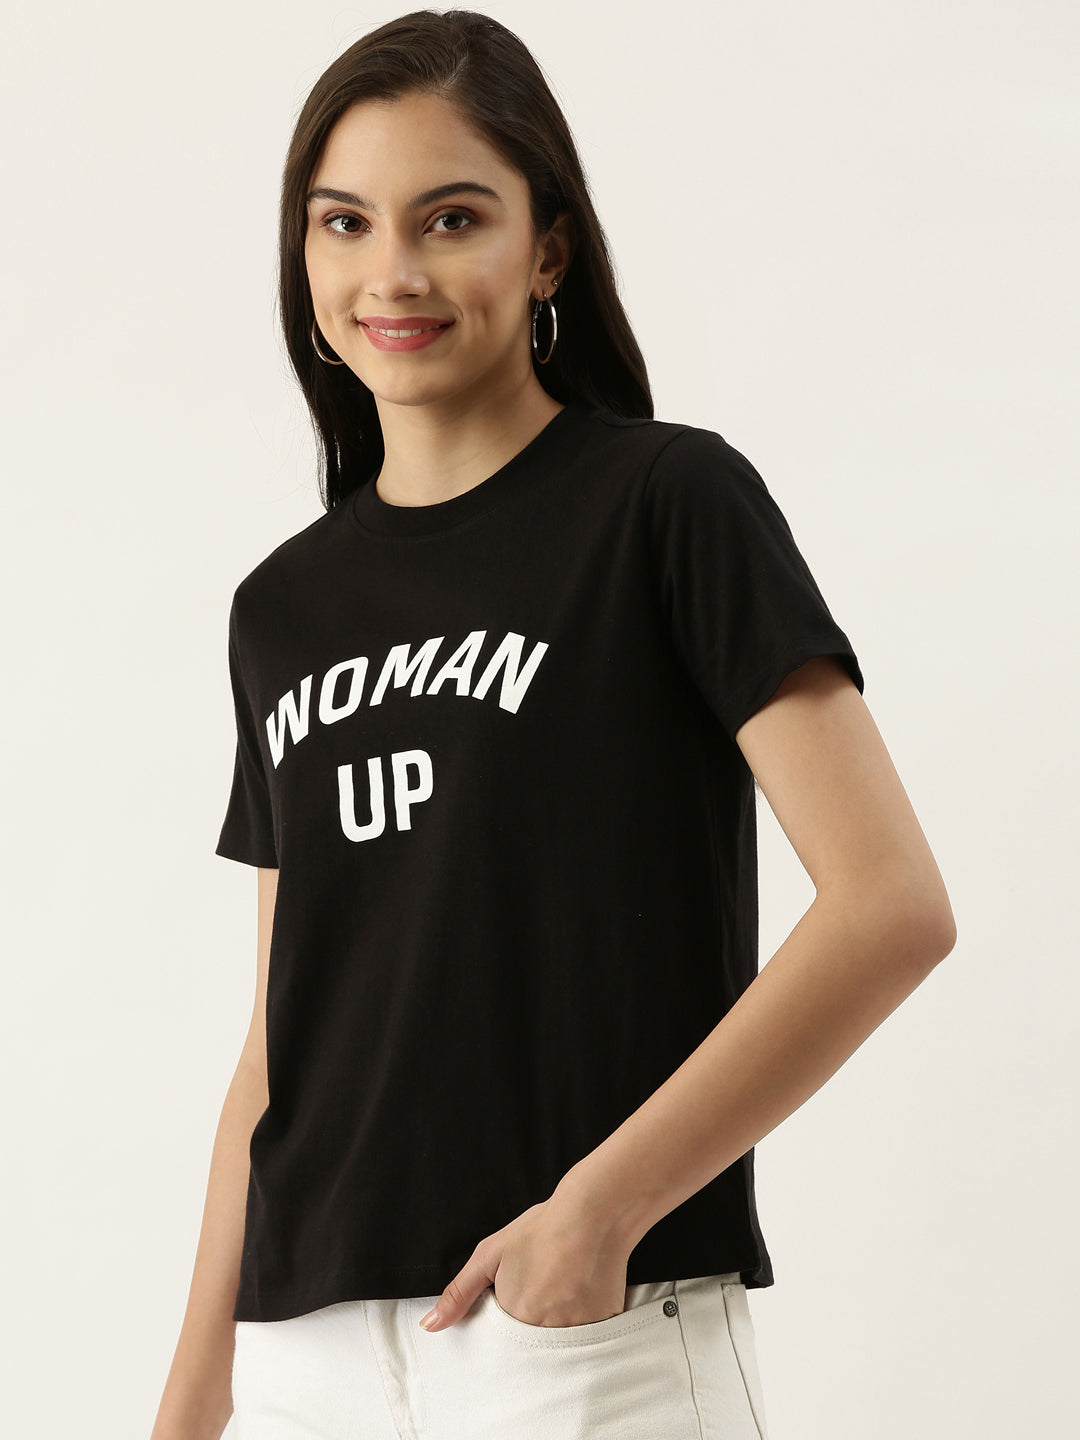 Black Printed T-Shirt For Women